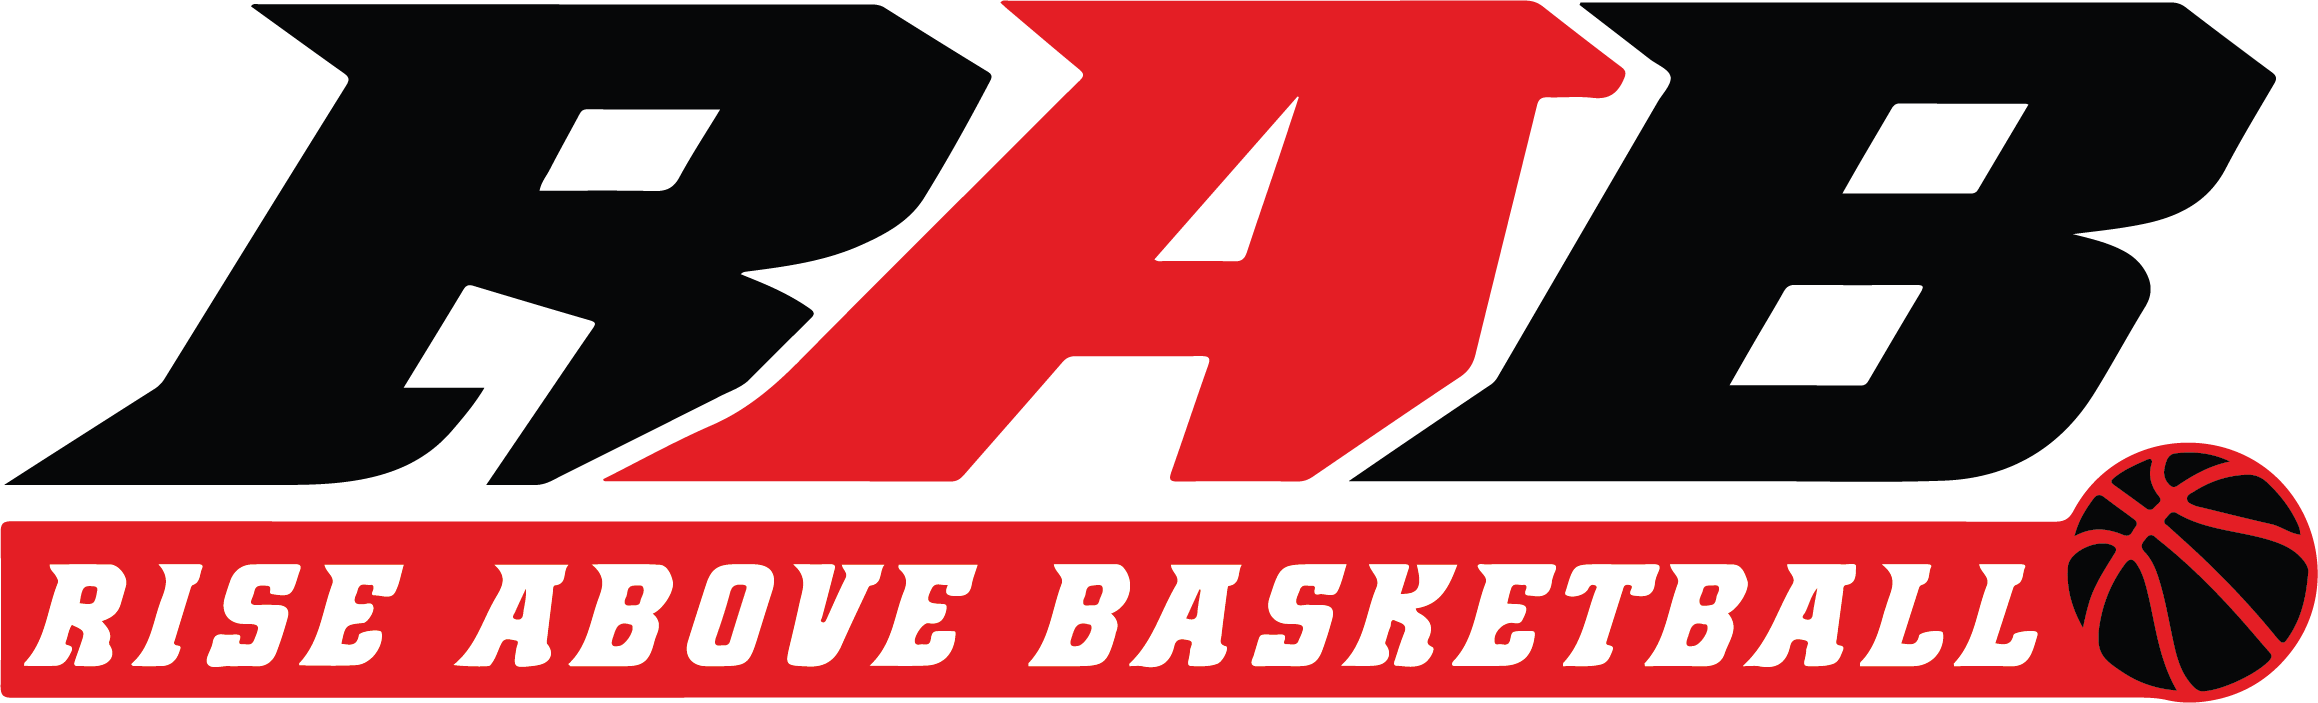 Rise Above Basketballl Logo (white background)